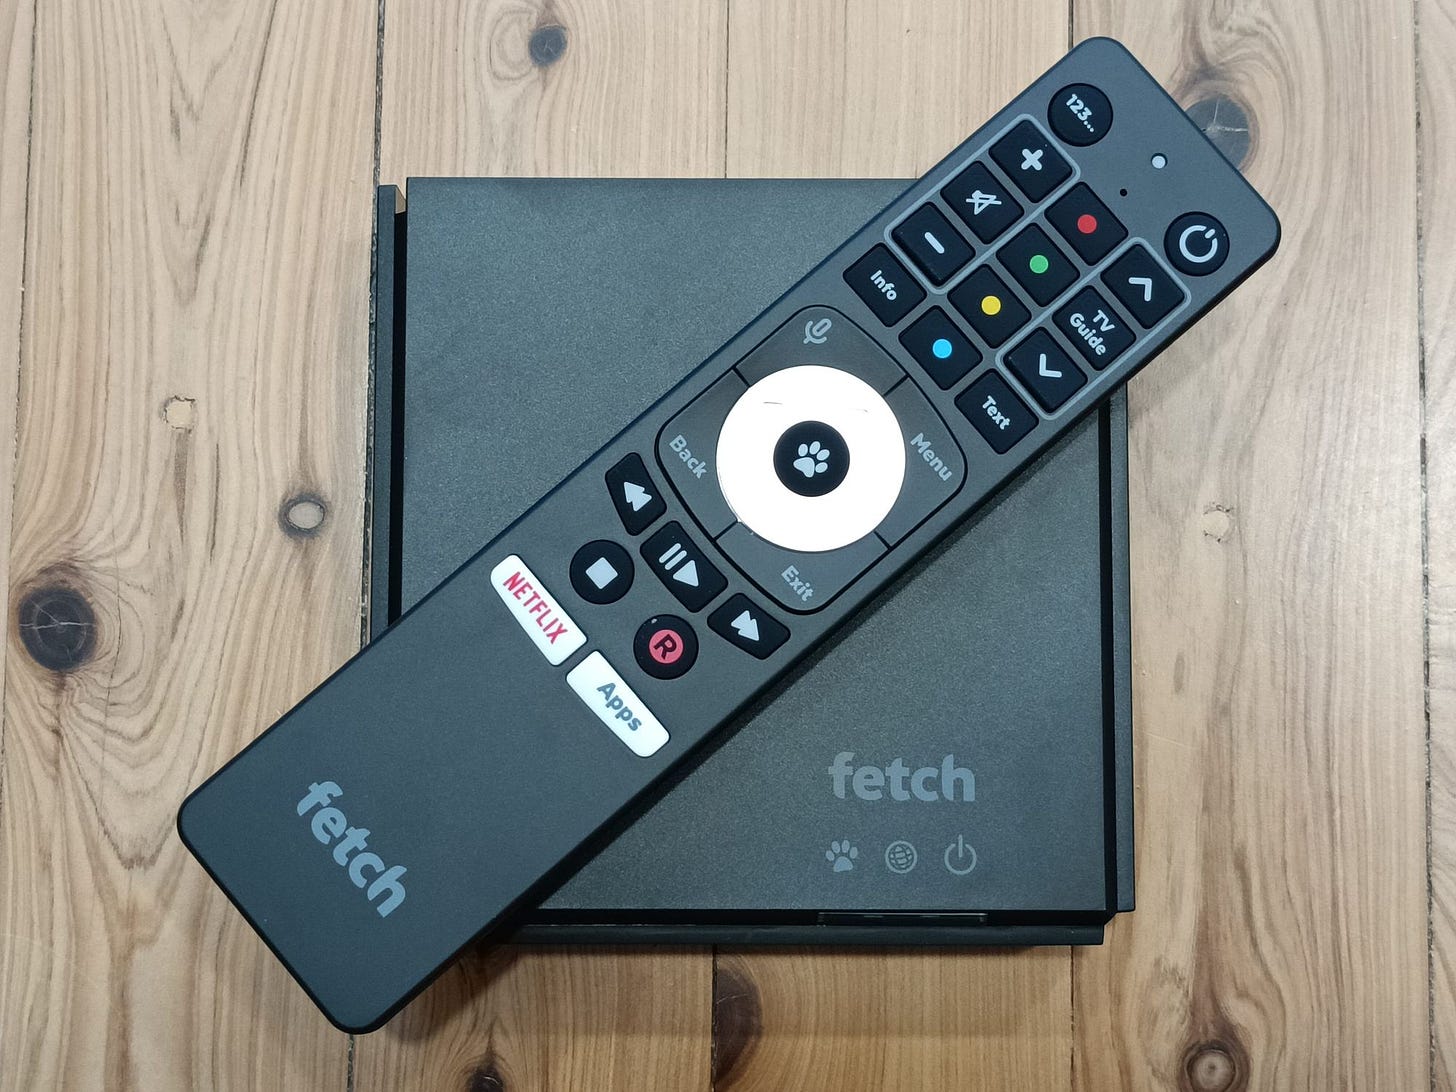 Telstra set to buy 51% of Fetch TV